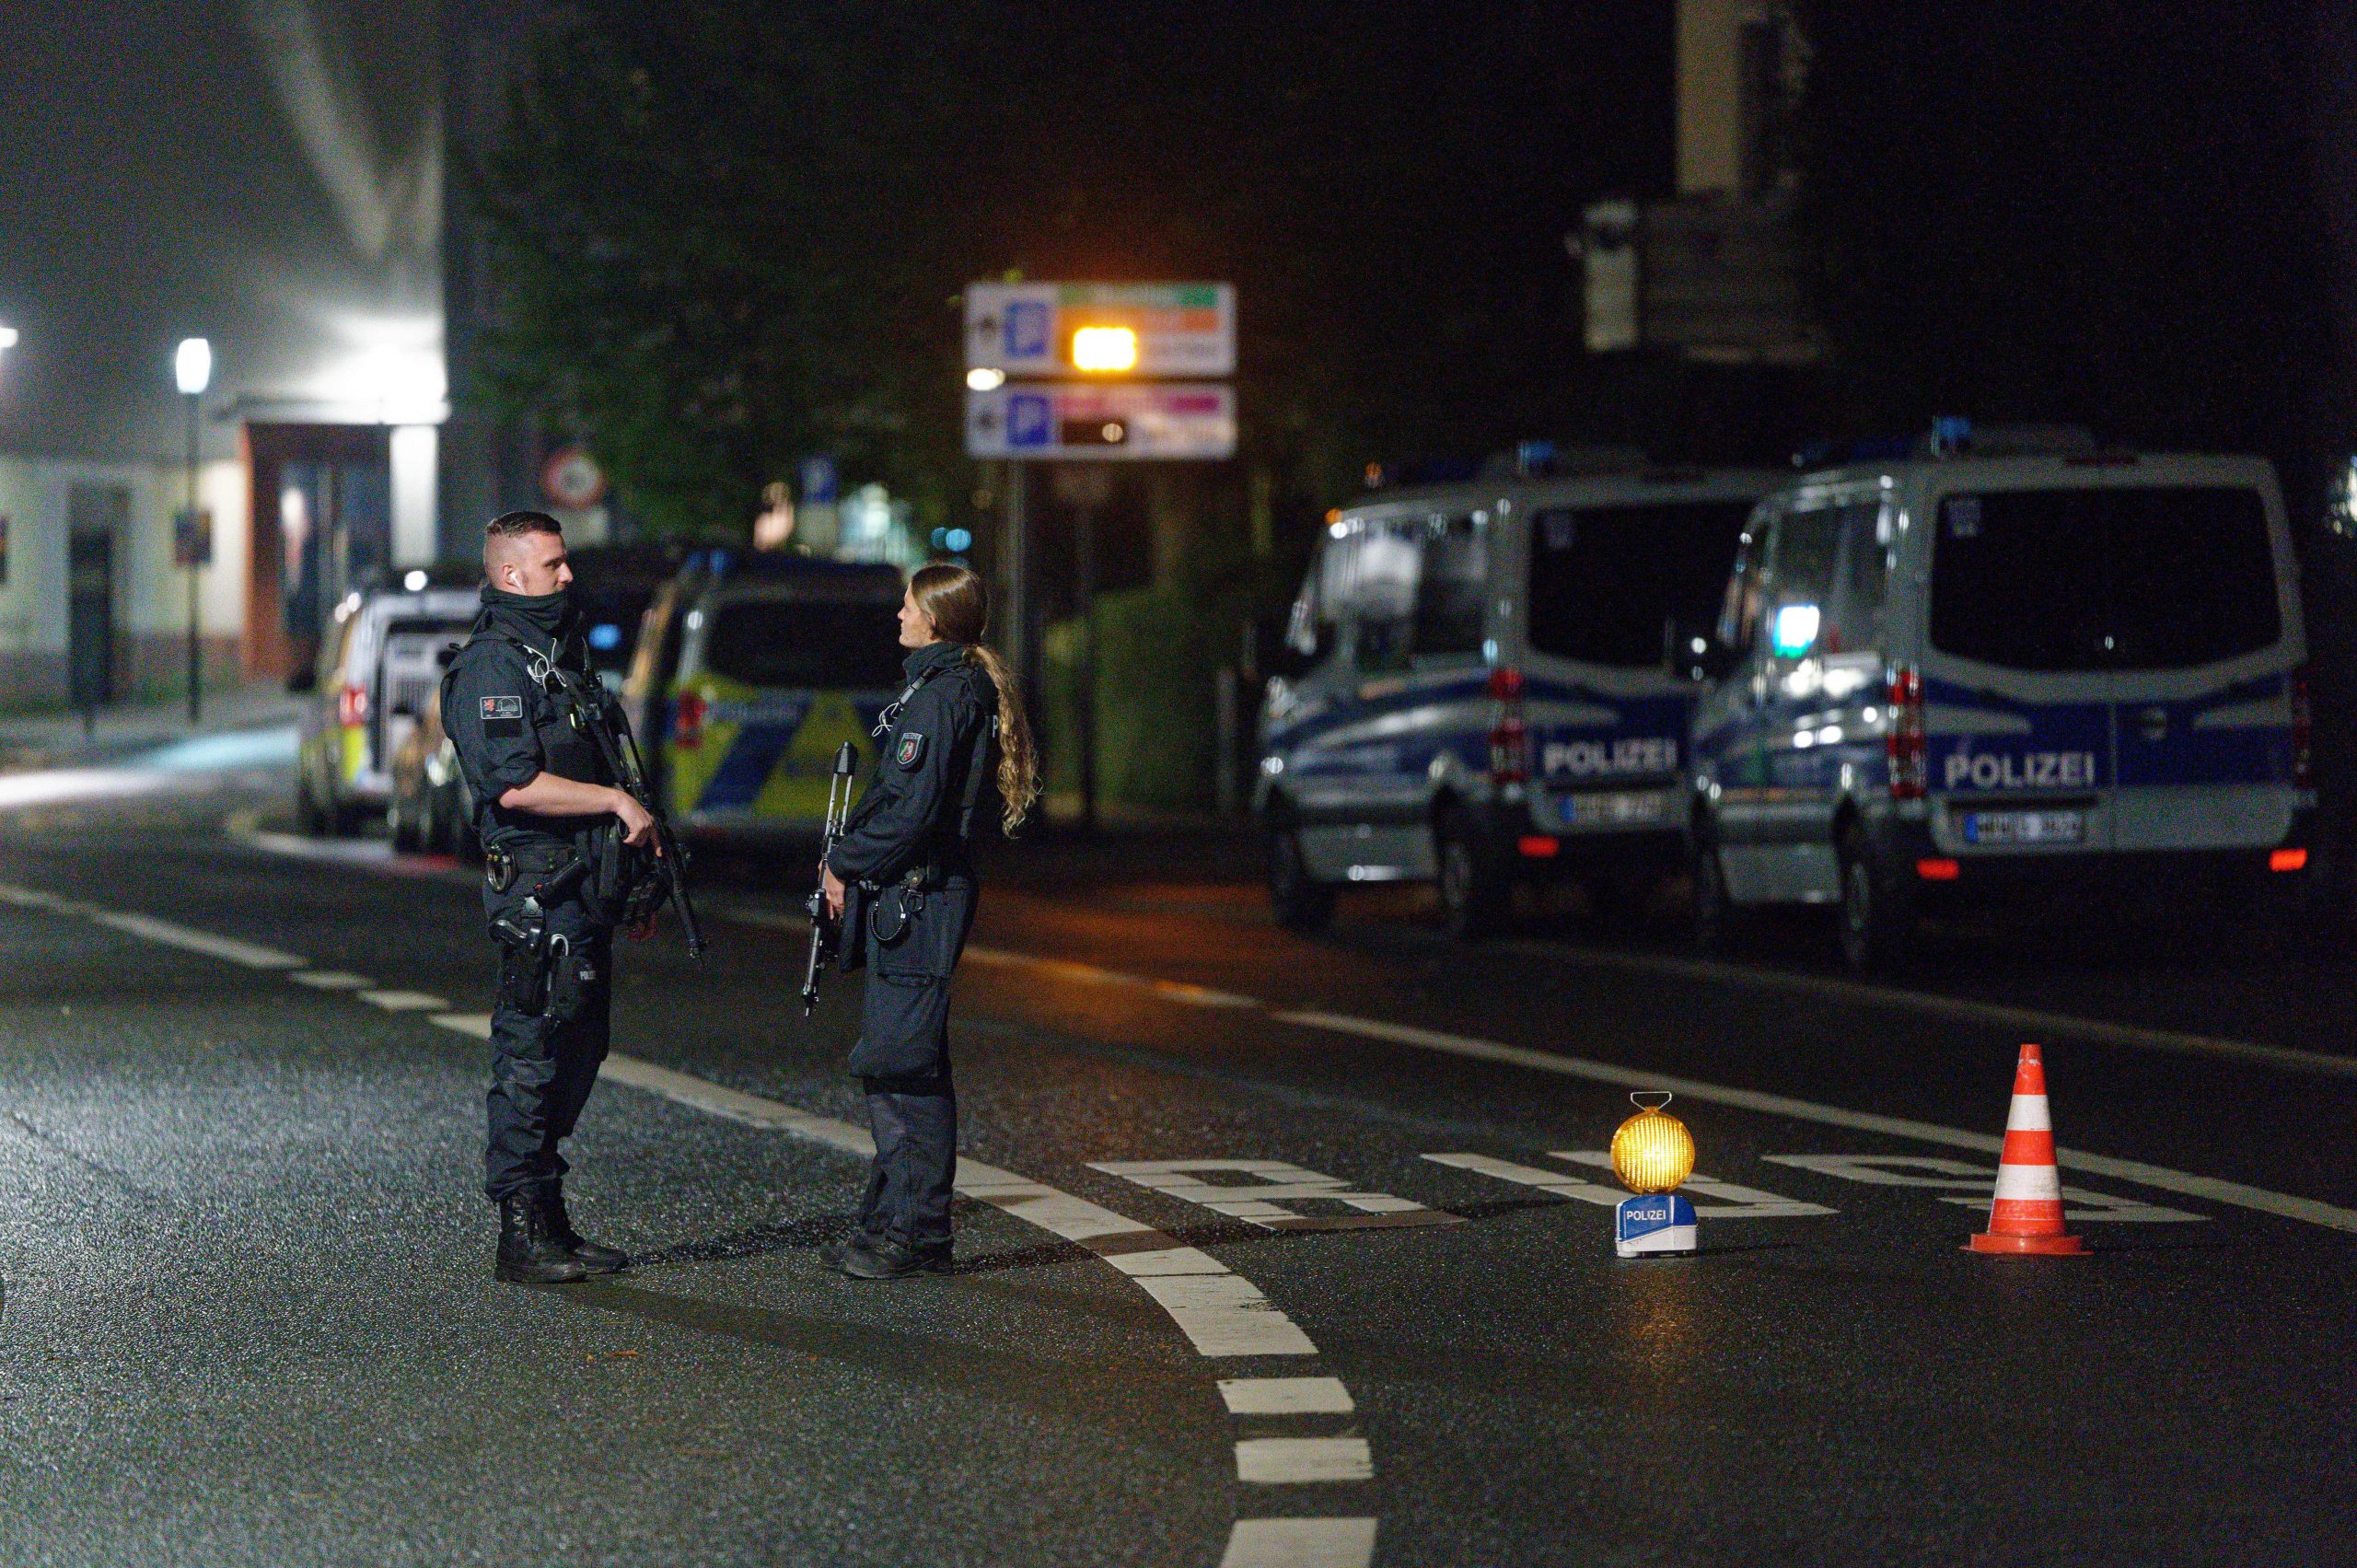 German police foil suspected Islamic terror plot on Yom Kippur